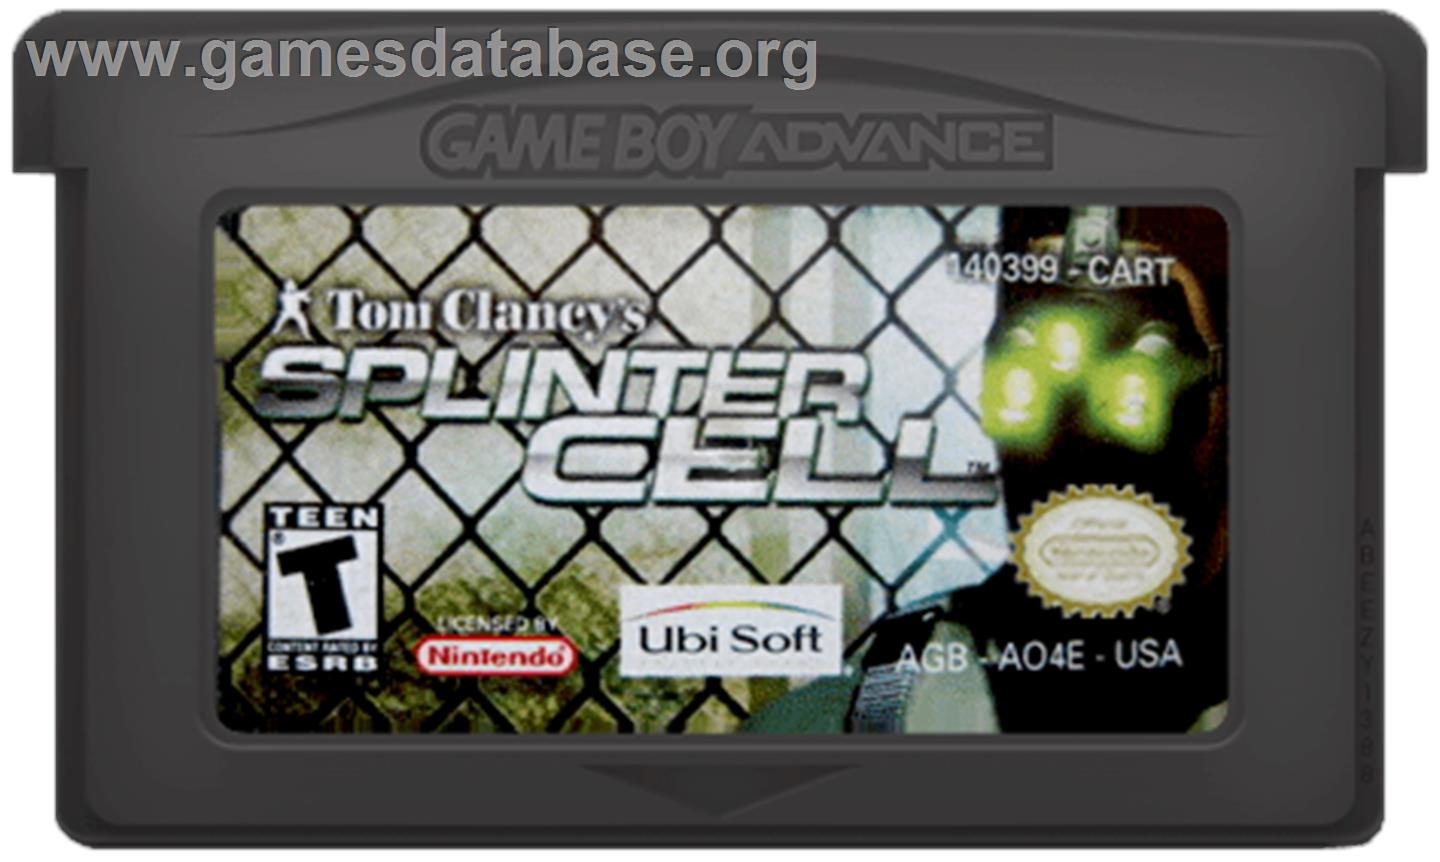 Tom Clancy's Splinter Cell - Nintendo Game Boy Advance - Artwork - Cartridge